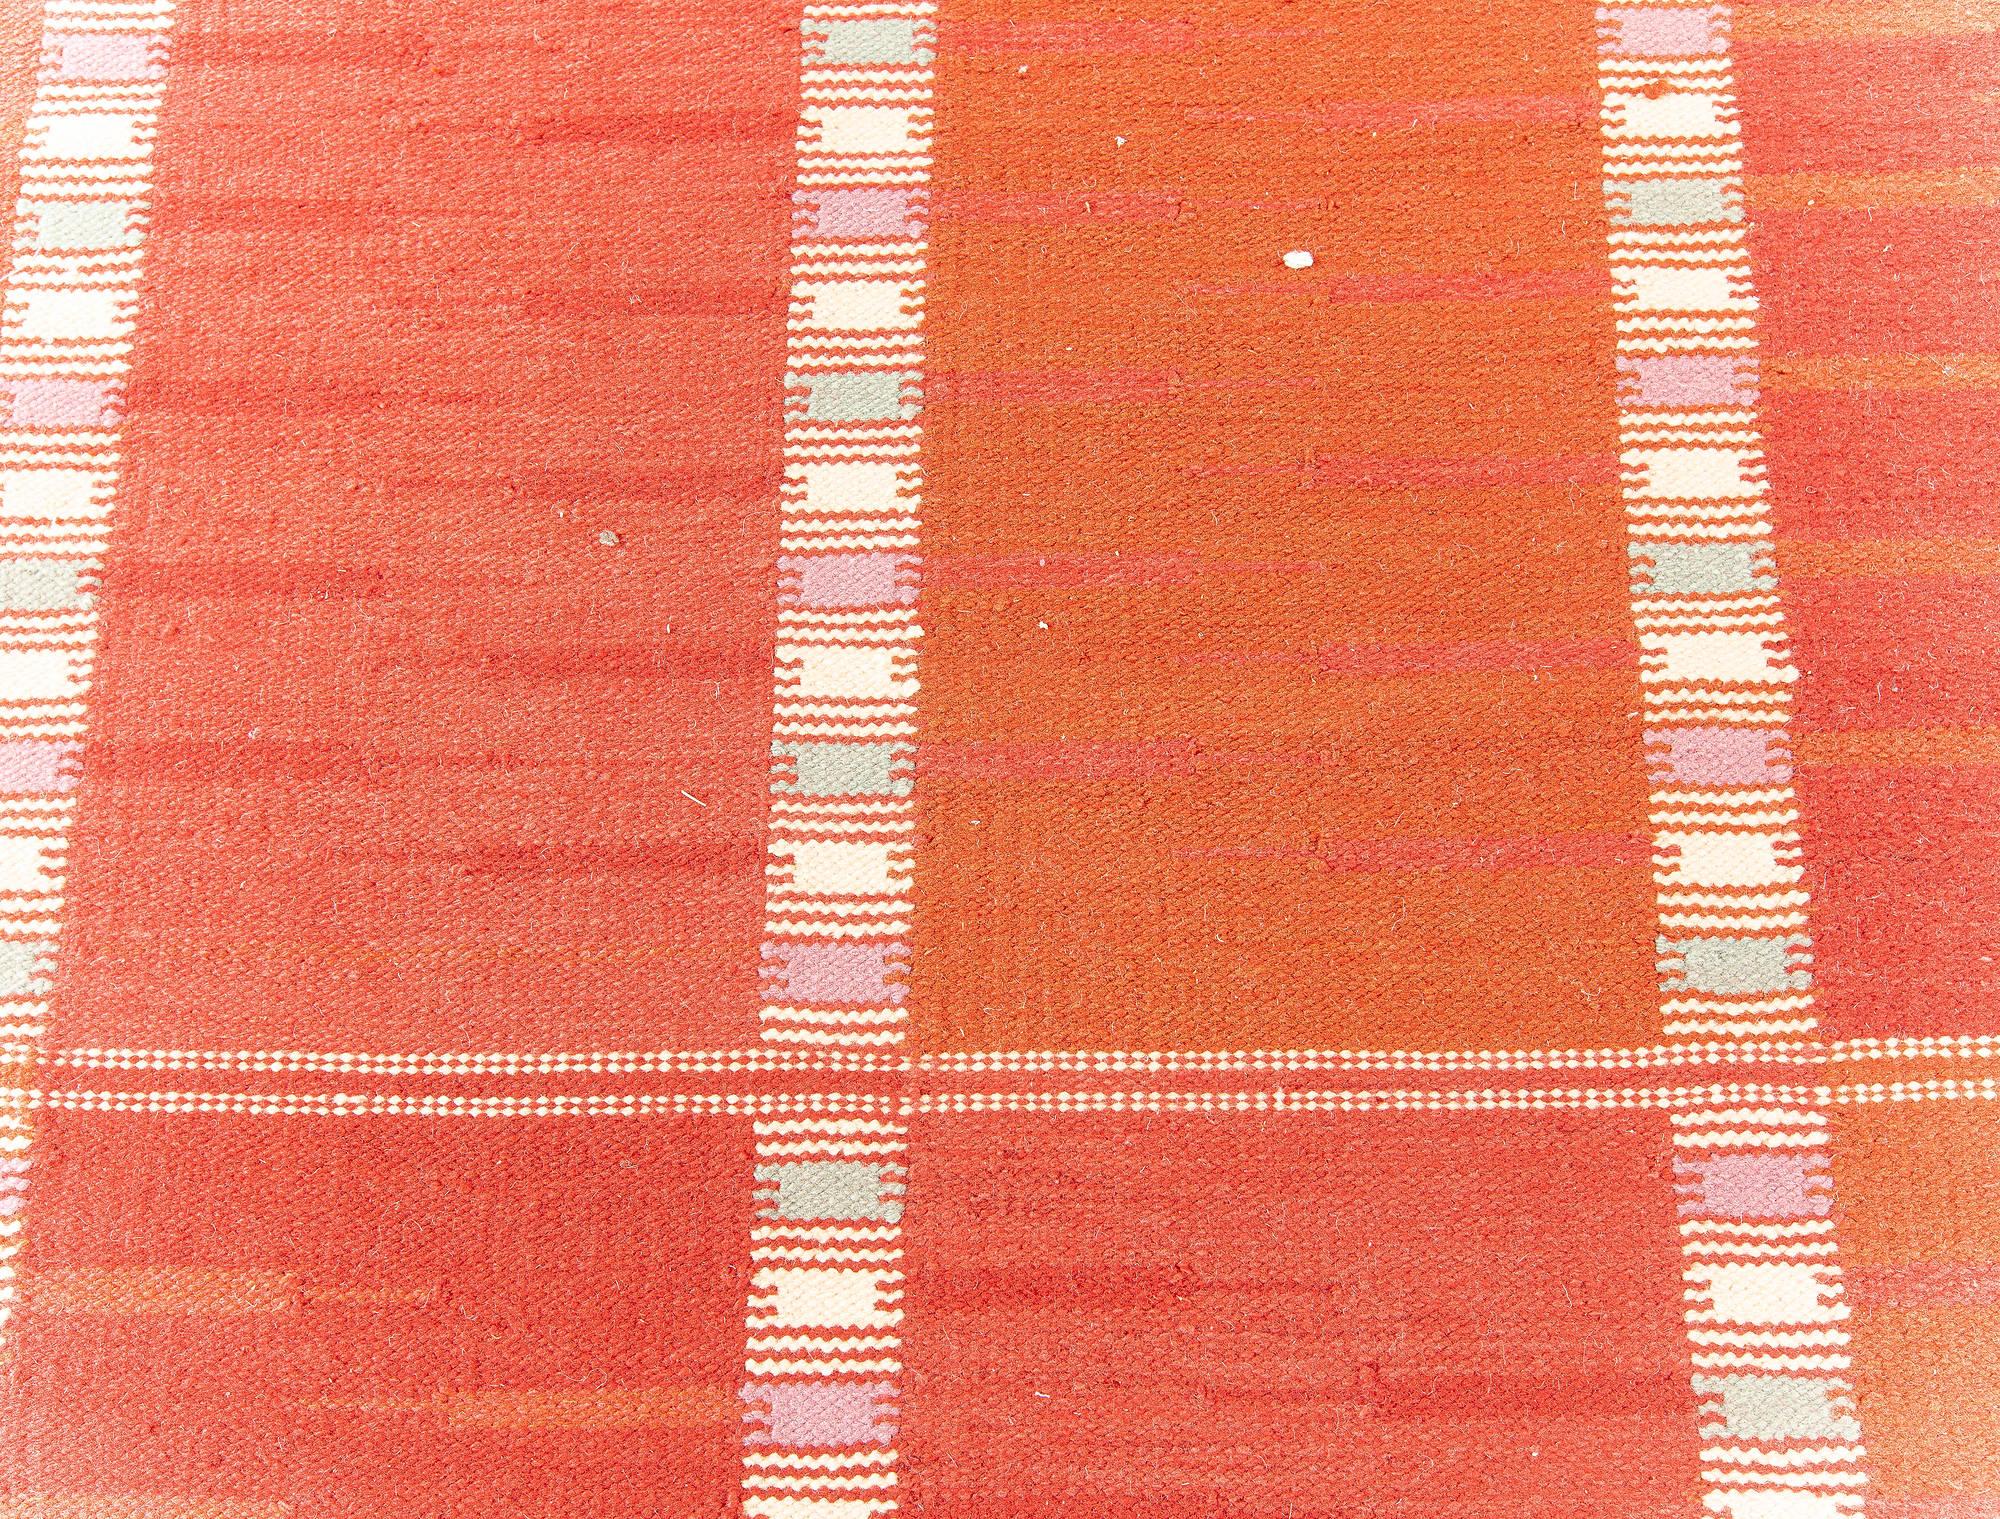 Modern oversized Swedish style red flat-weave rug by Doris Leslie Blau
Size: 17'1